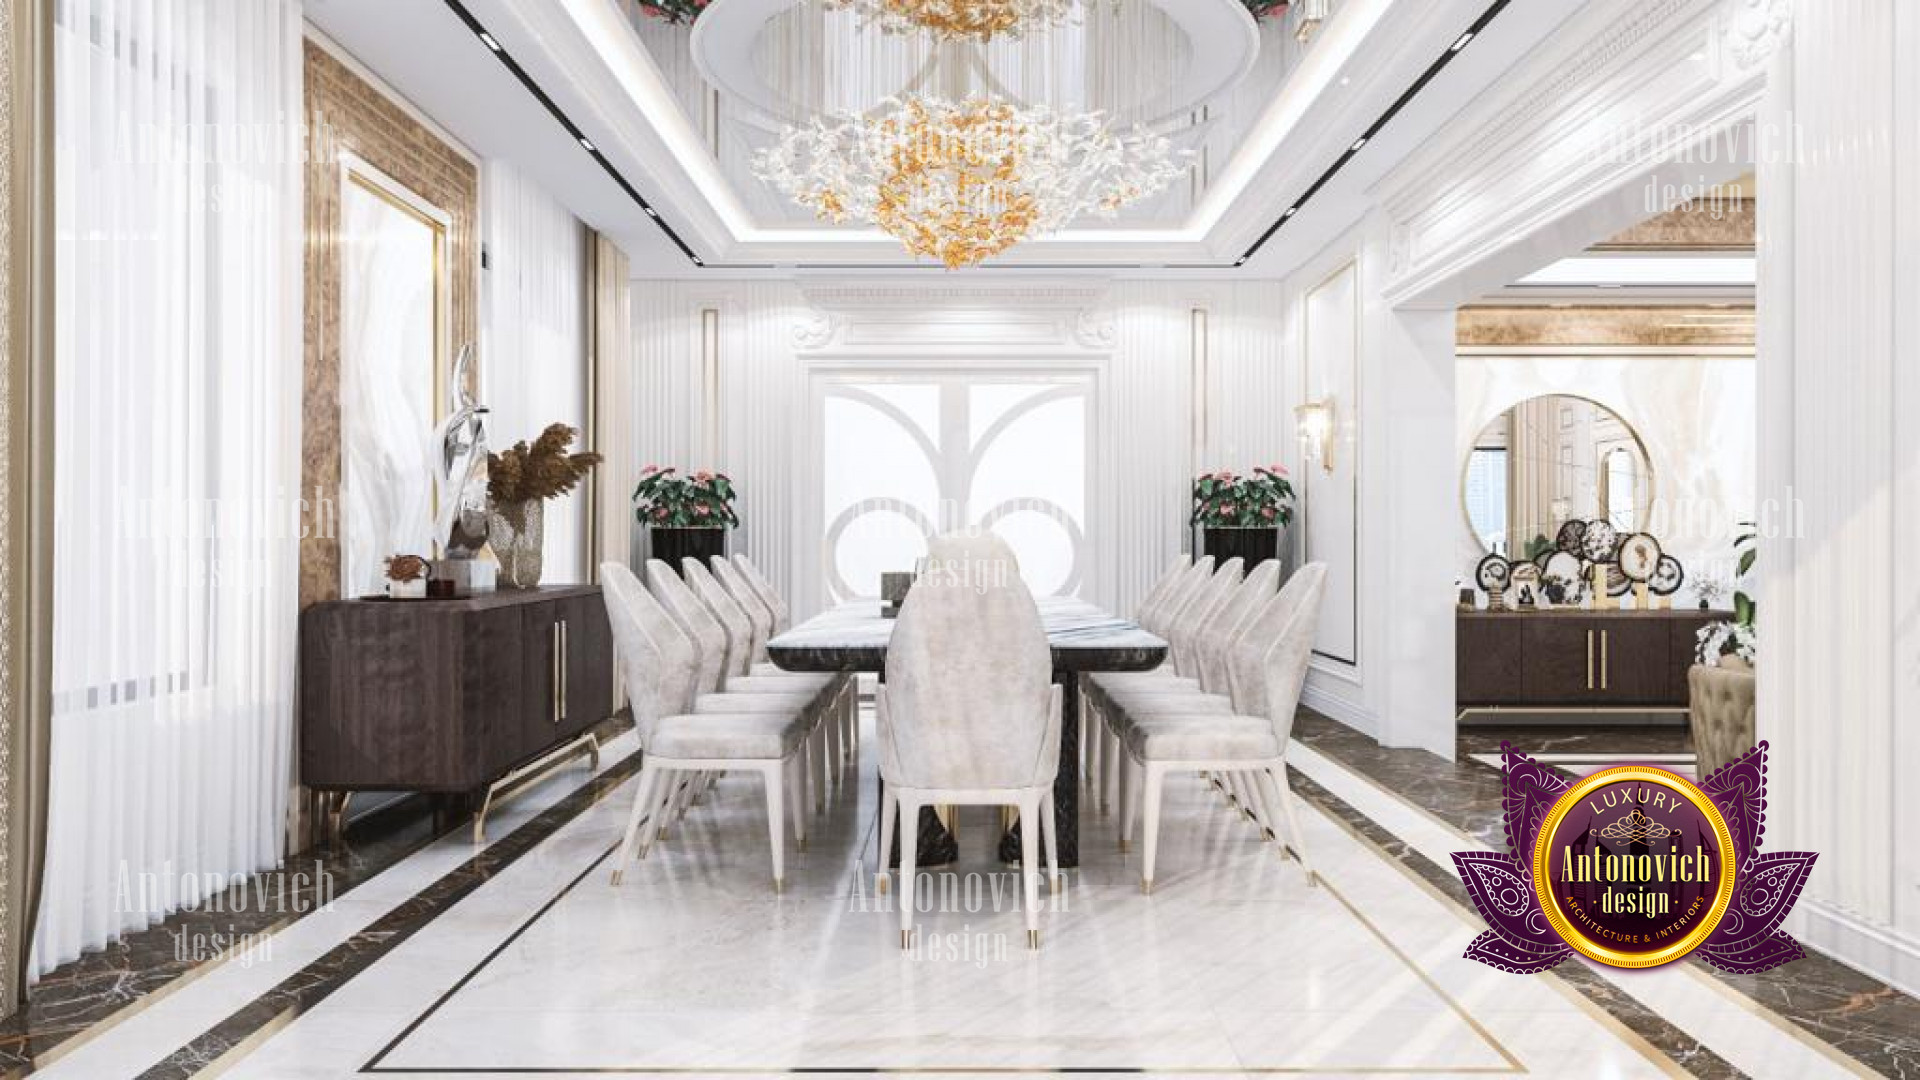 Dining Room Design For 22 Carat Villa Design The Palm